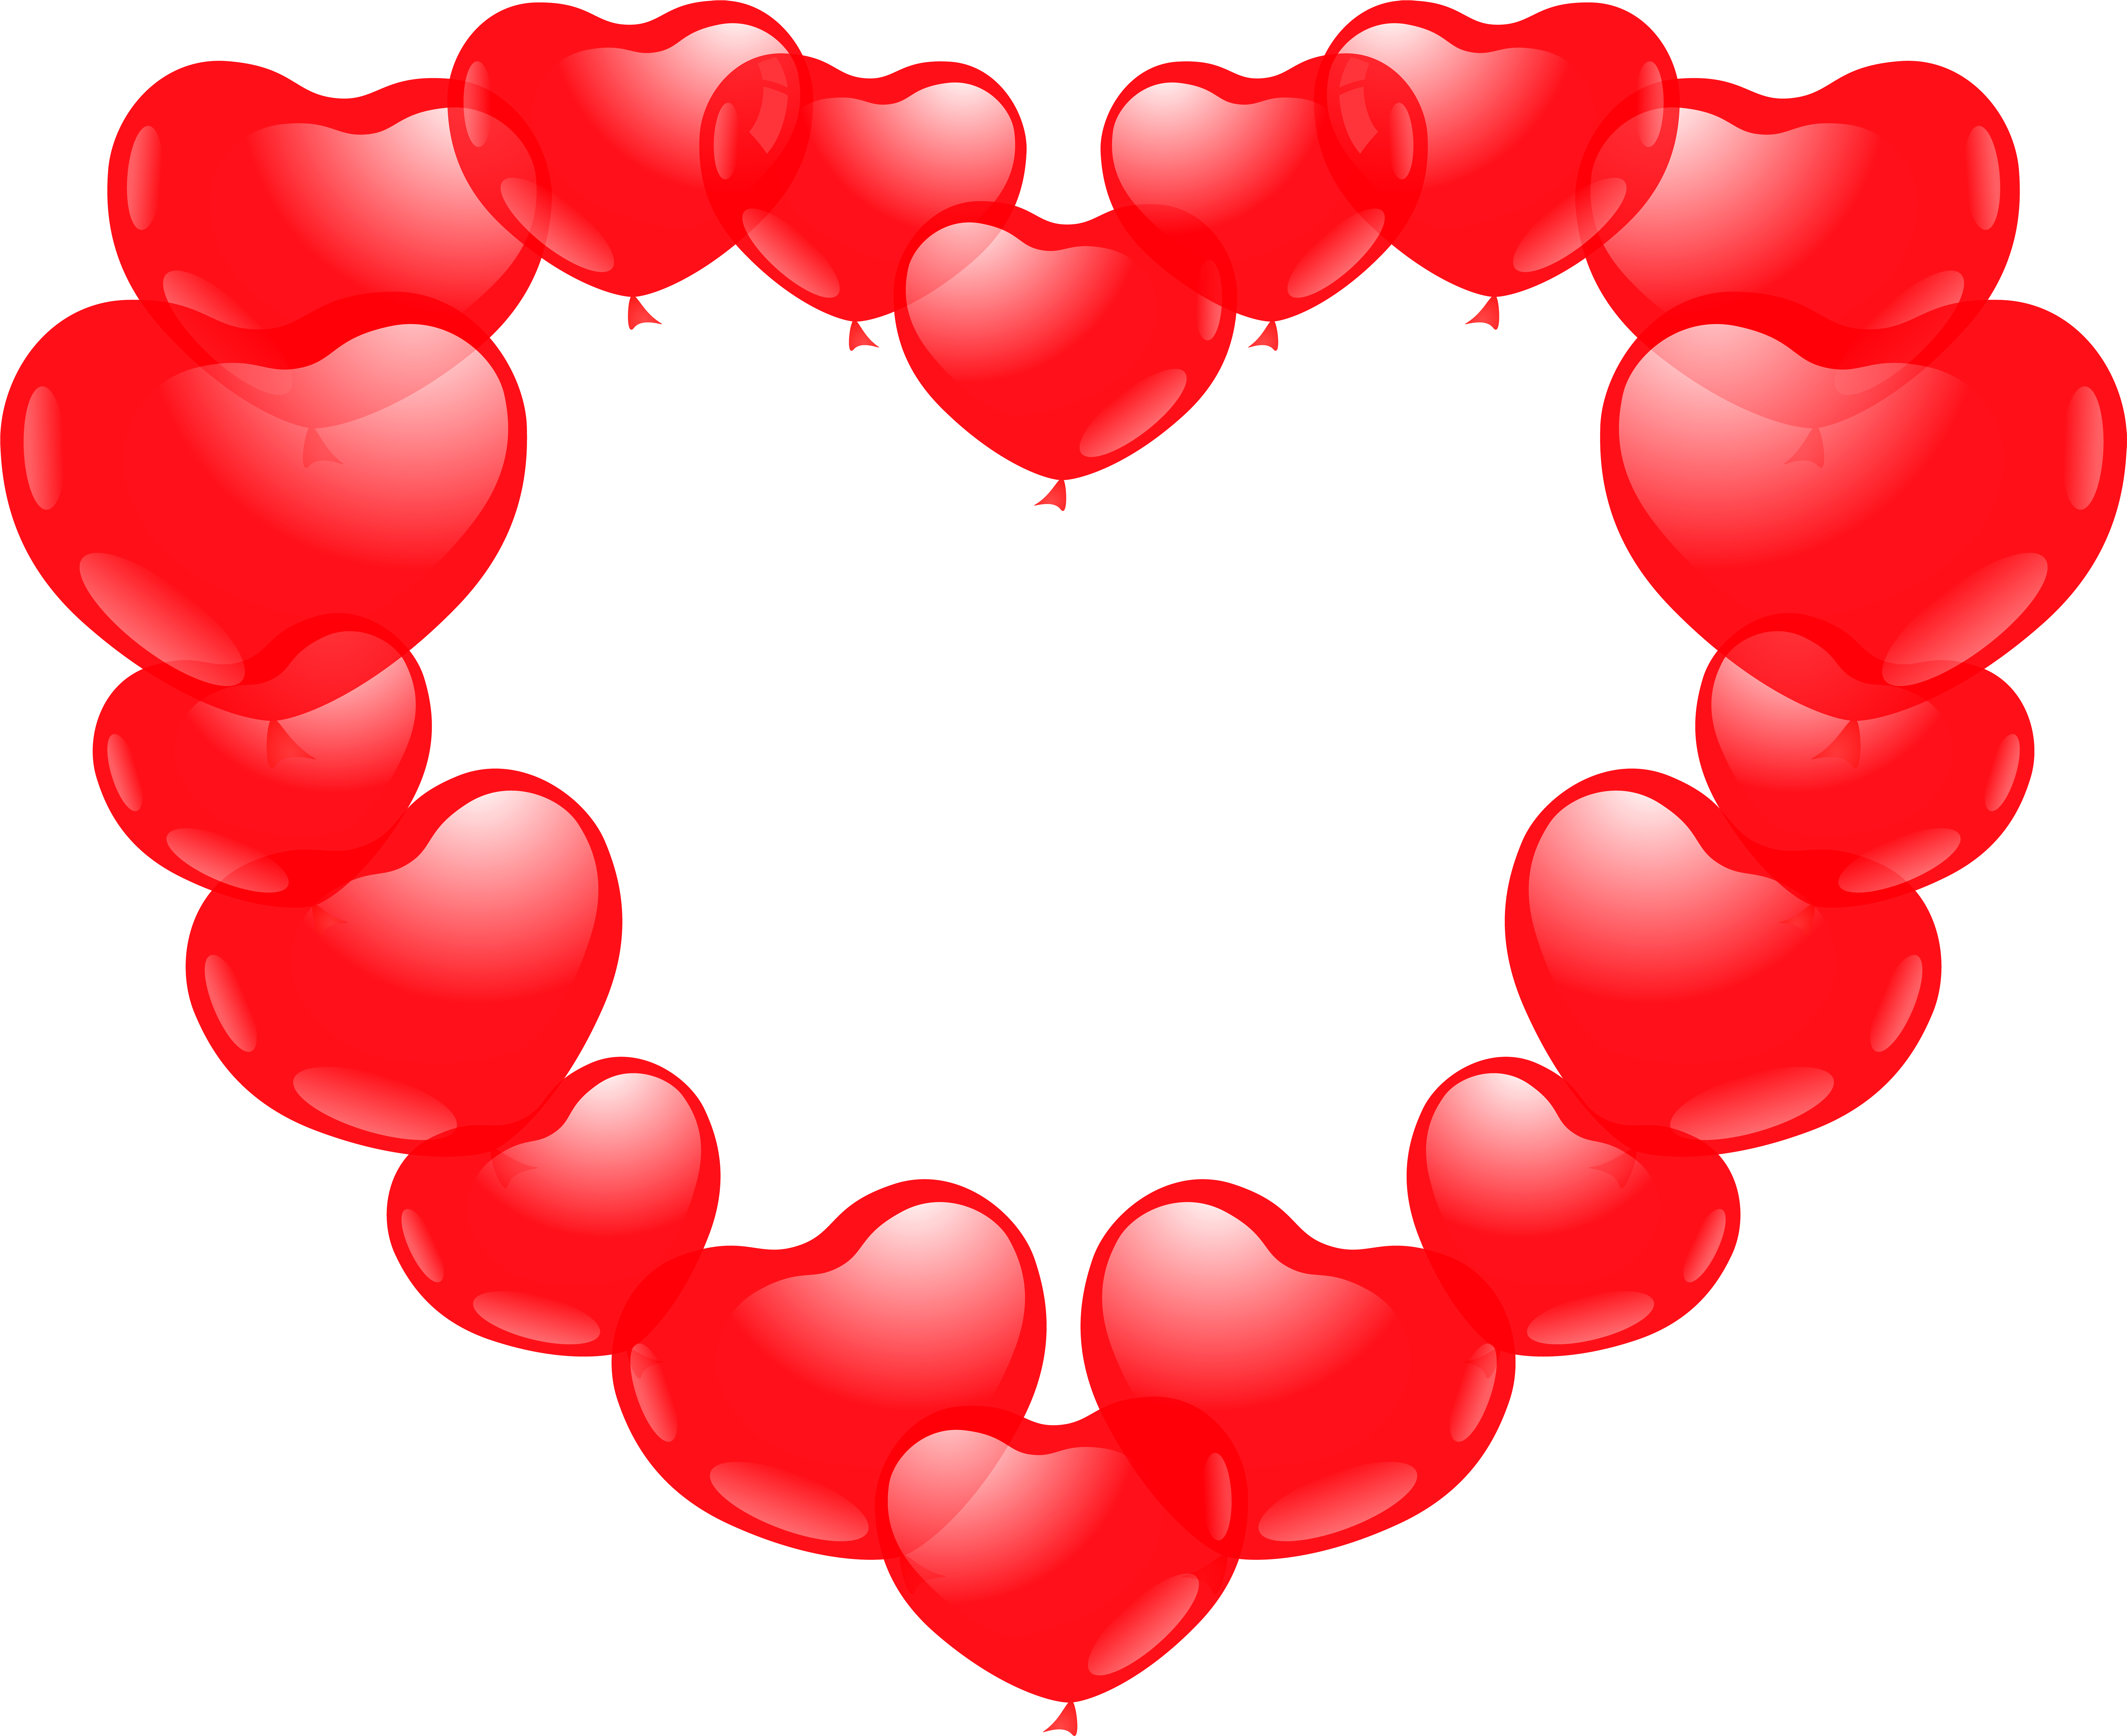 Heart Of Ballon Hearts Png Clip Art Image